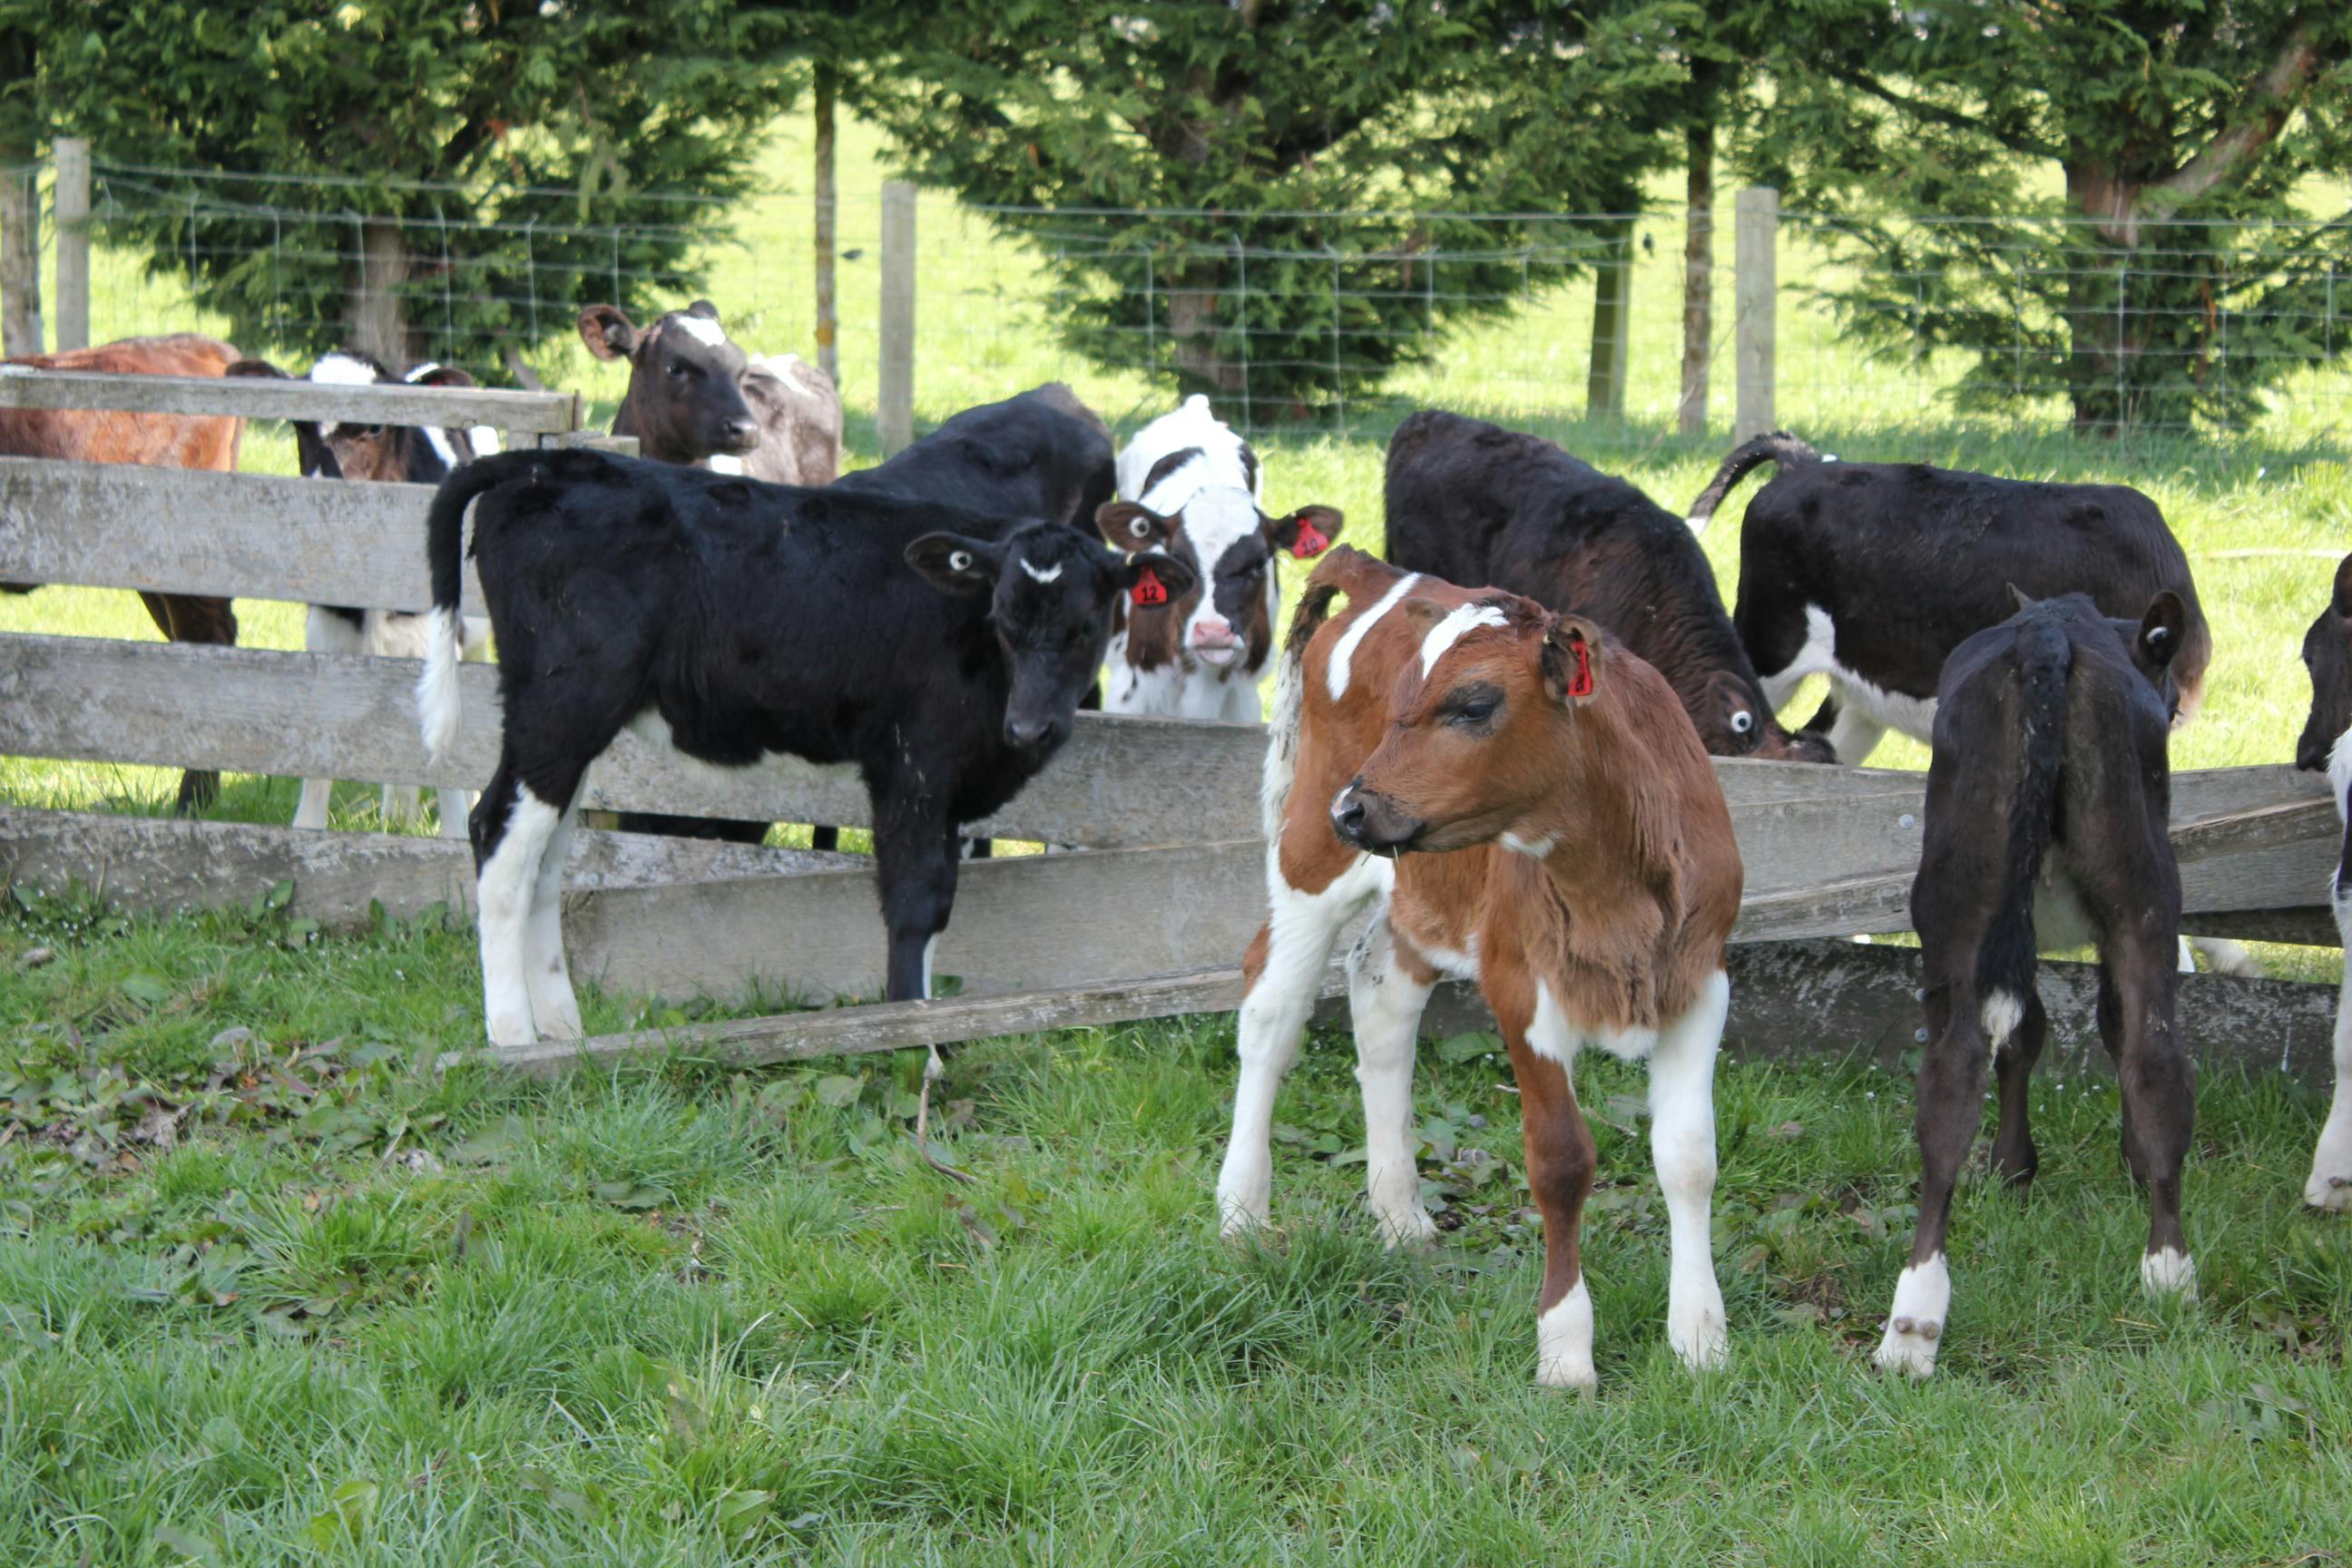 Free stock photo of healthy calves on Cow & Calf Formula